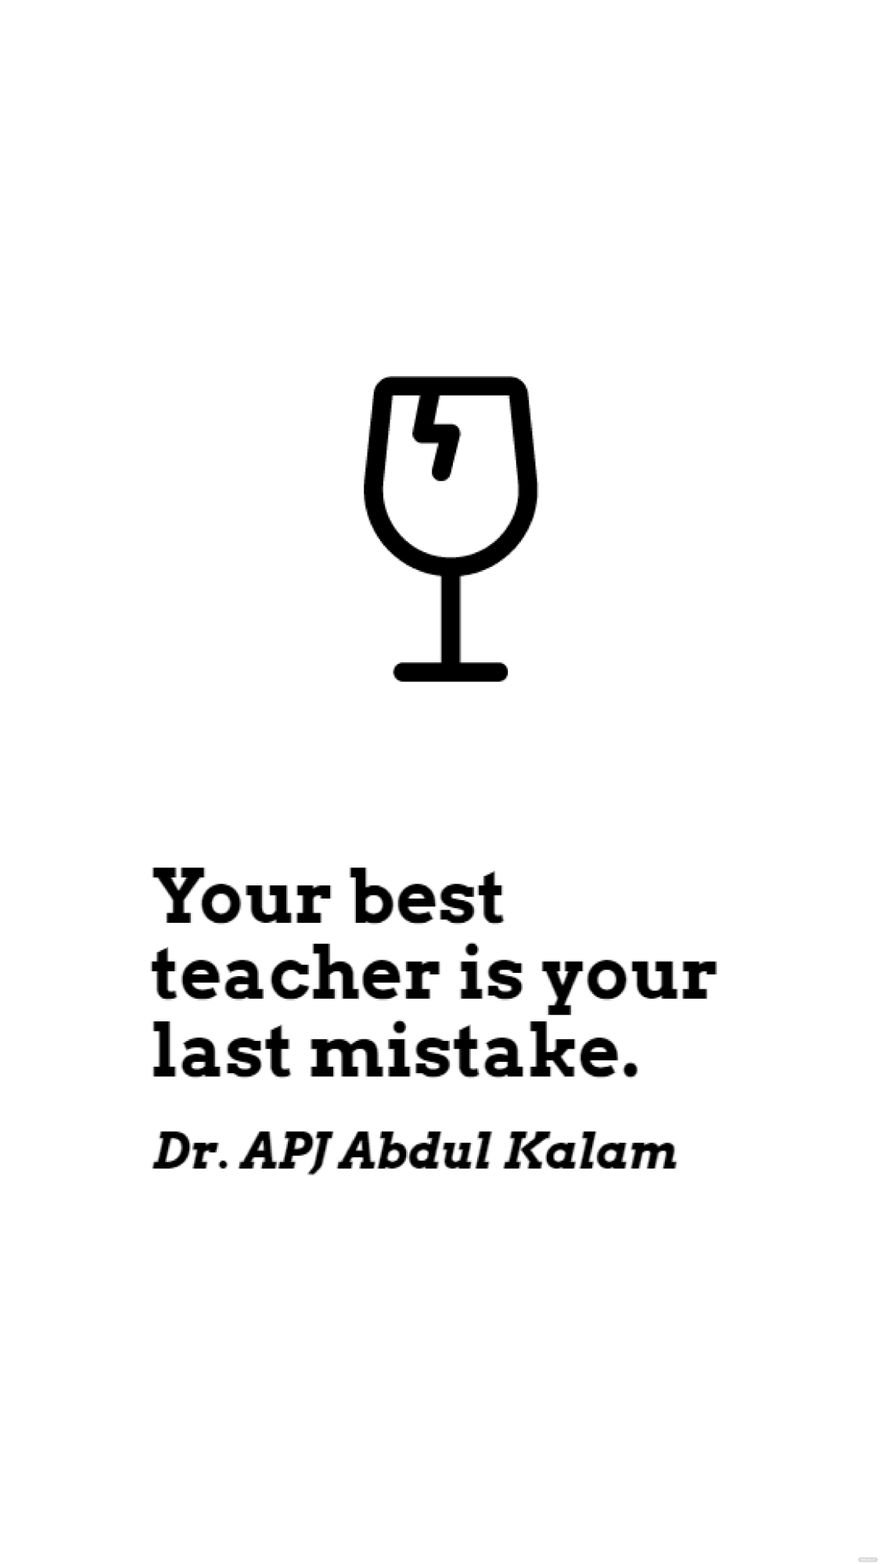 Free Dr. APJ Abdul Kalam - Your best teacher is your last mistake. in JPG